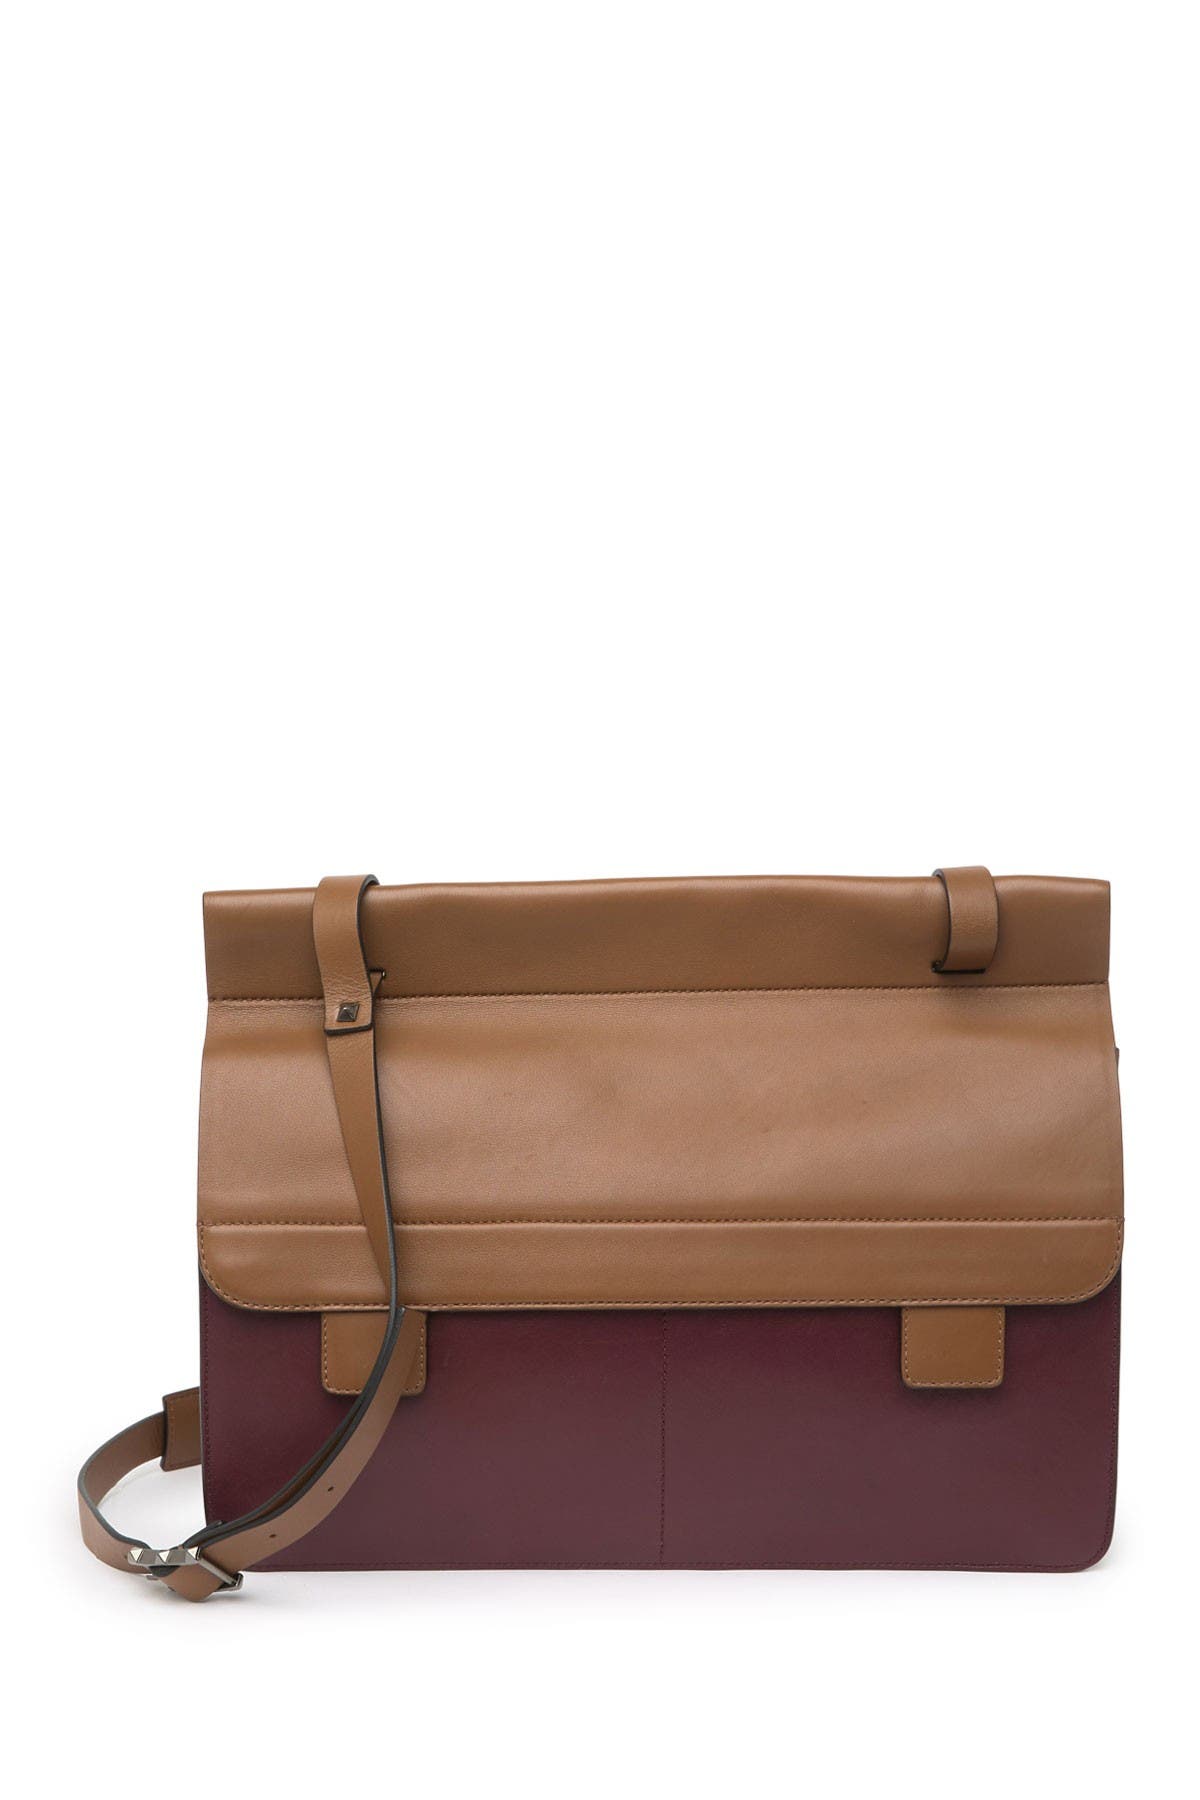 Valentino Garavani Colorblock Leather Messenger Bag In Chocolate/rubin